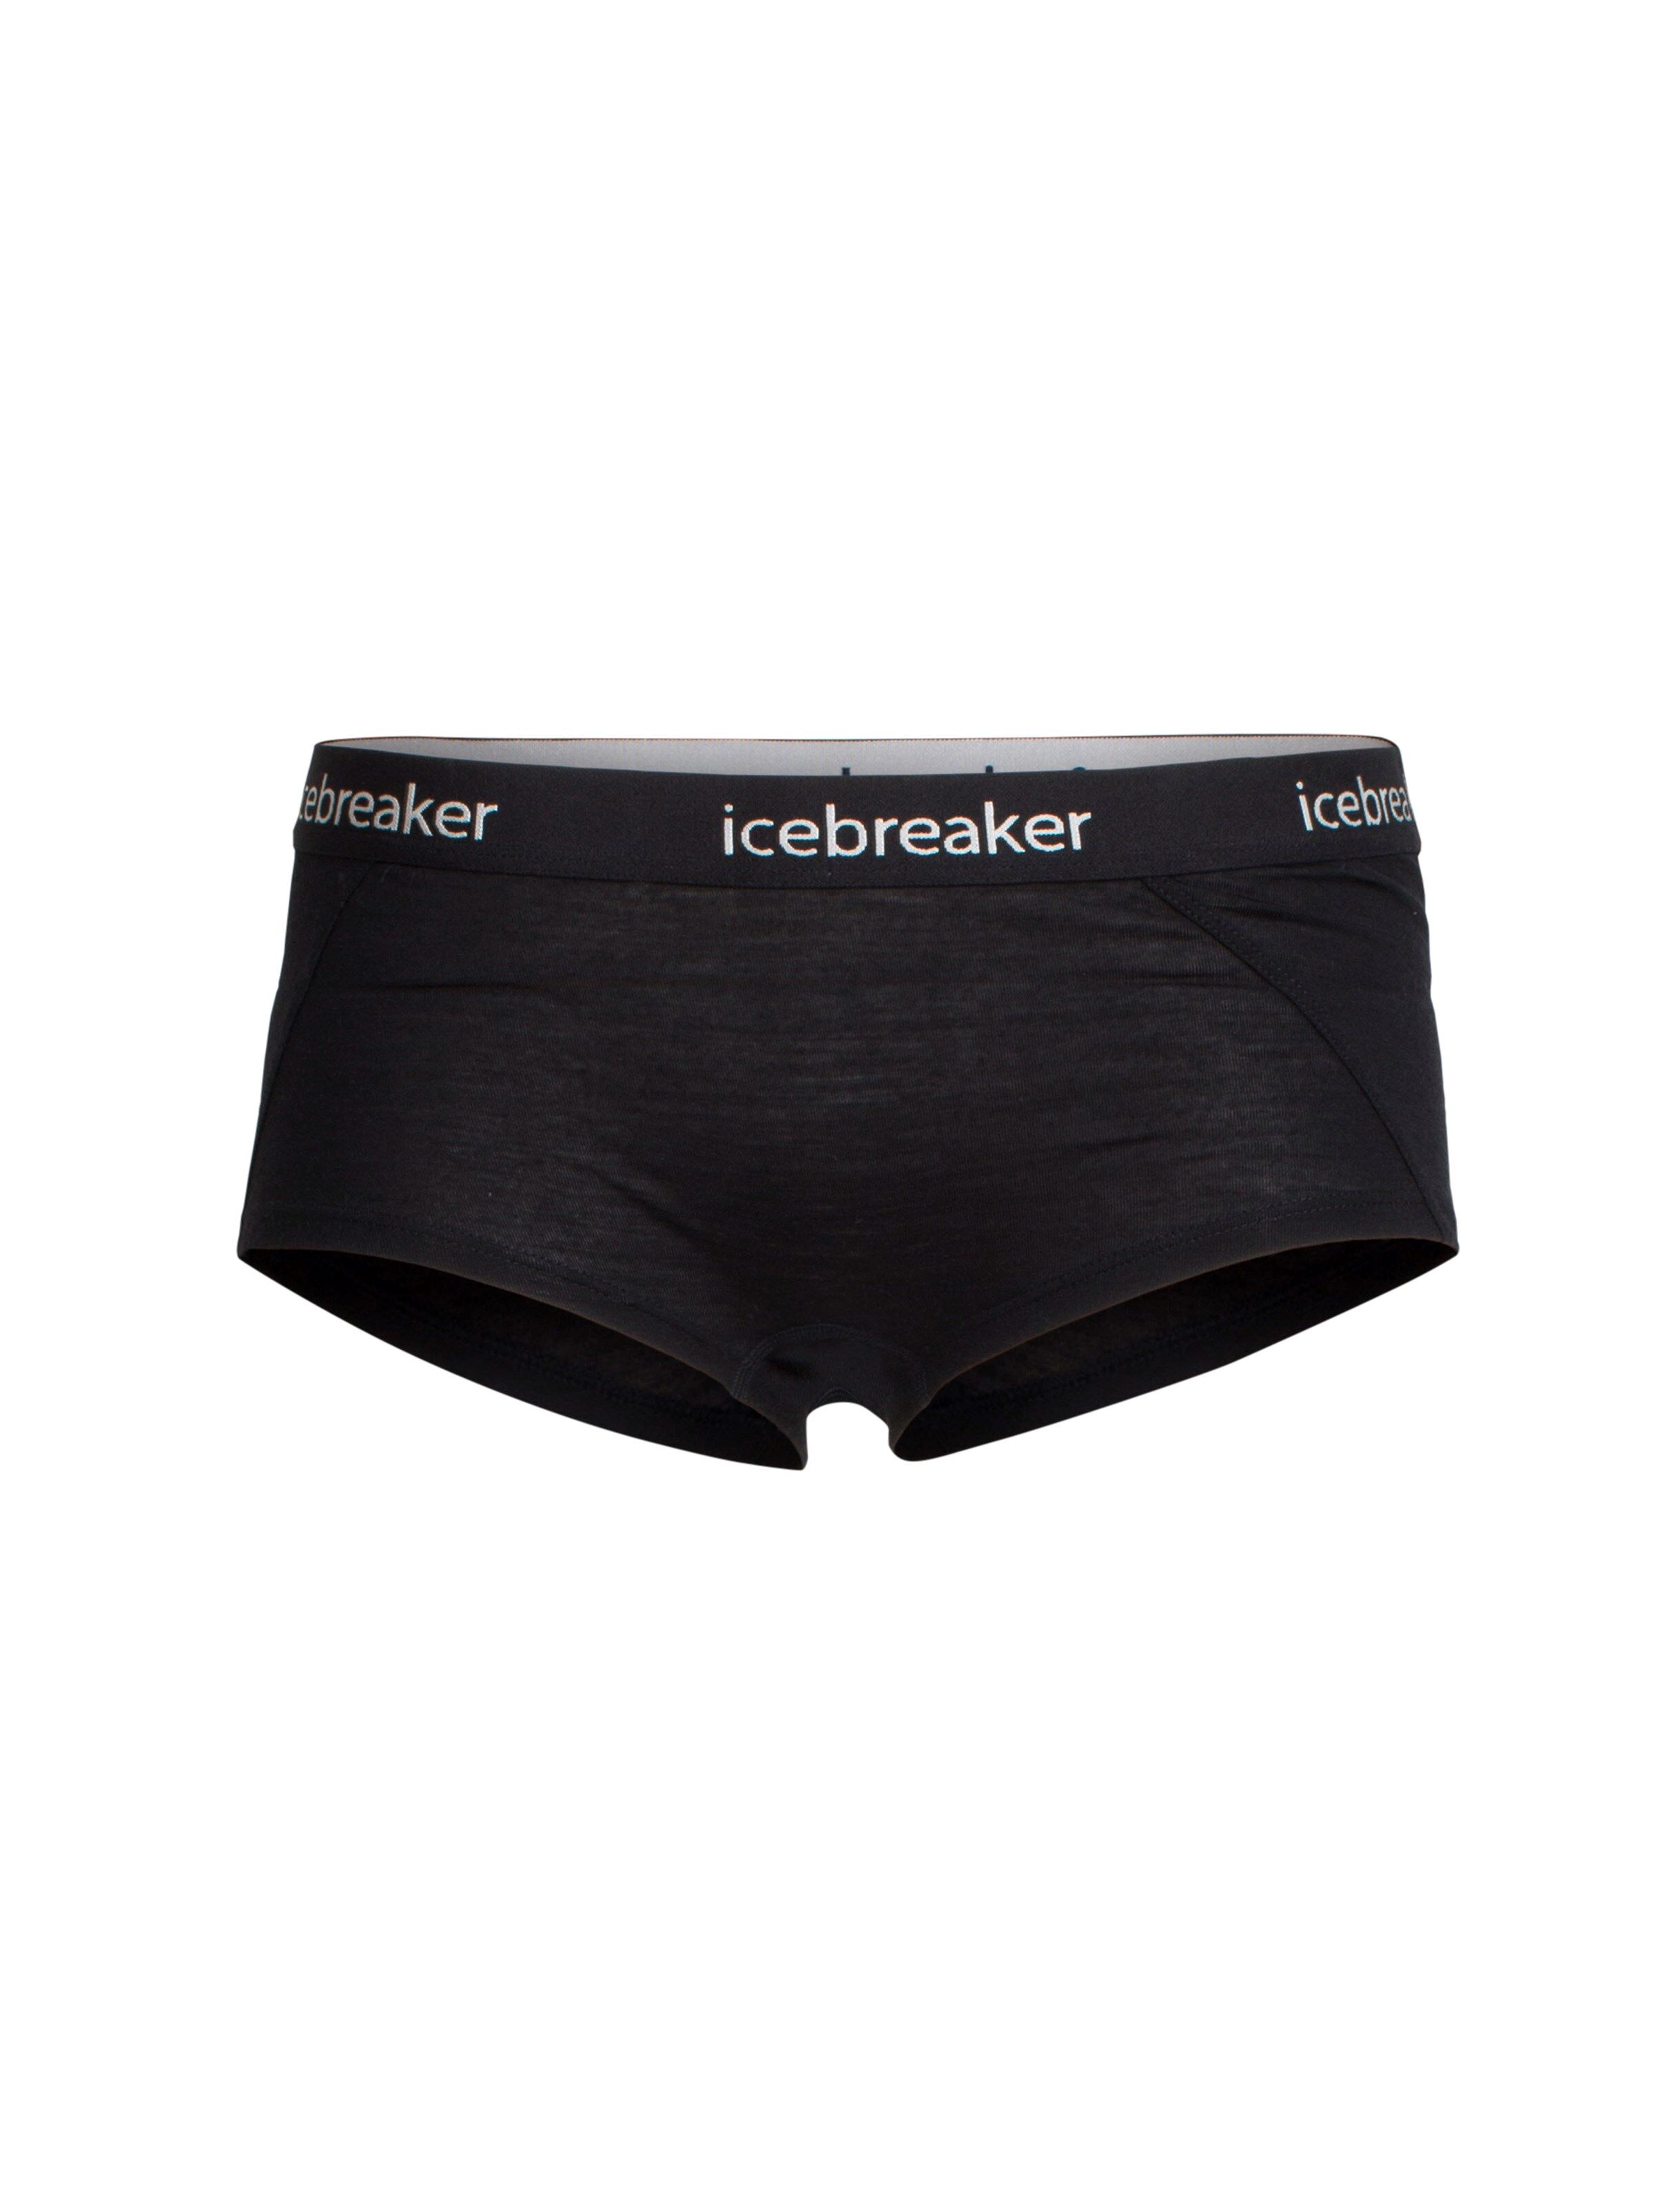 Icebreaker Sprite Hot pants, undertøy dame Black 103023001 M 2020